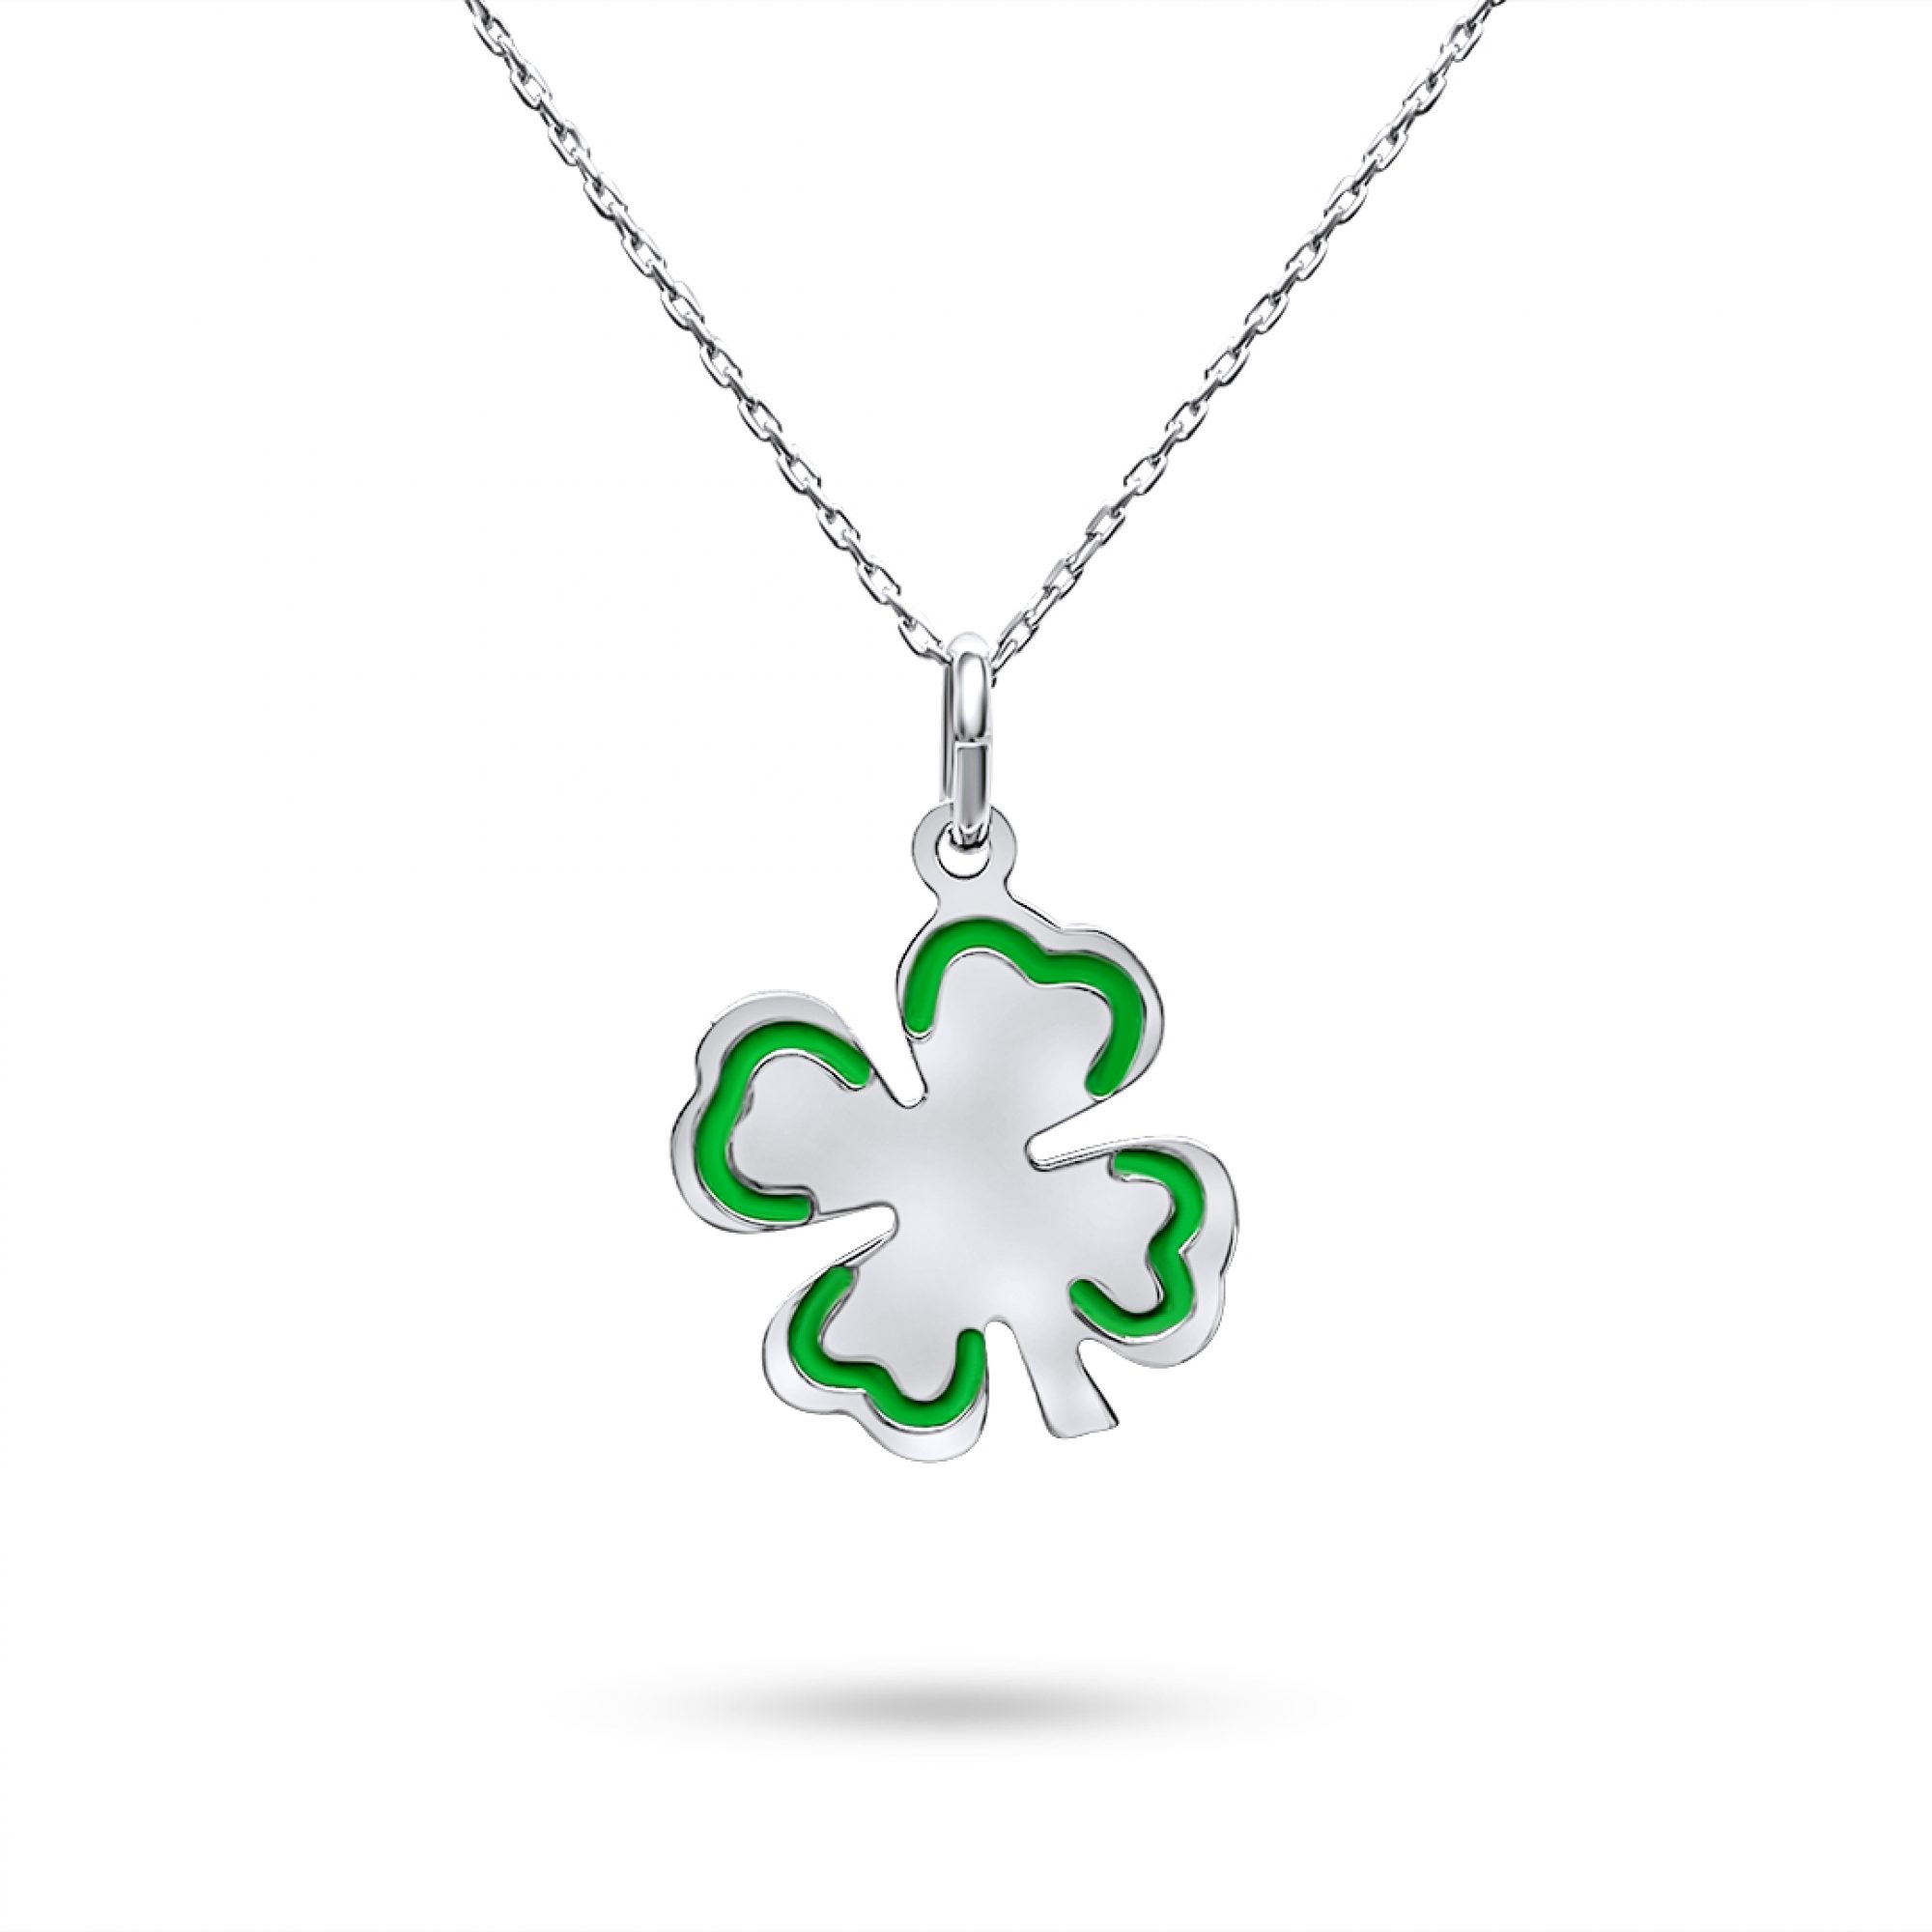 Four leaf clover necklace with enamel